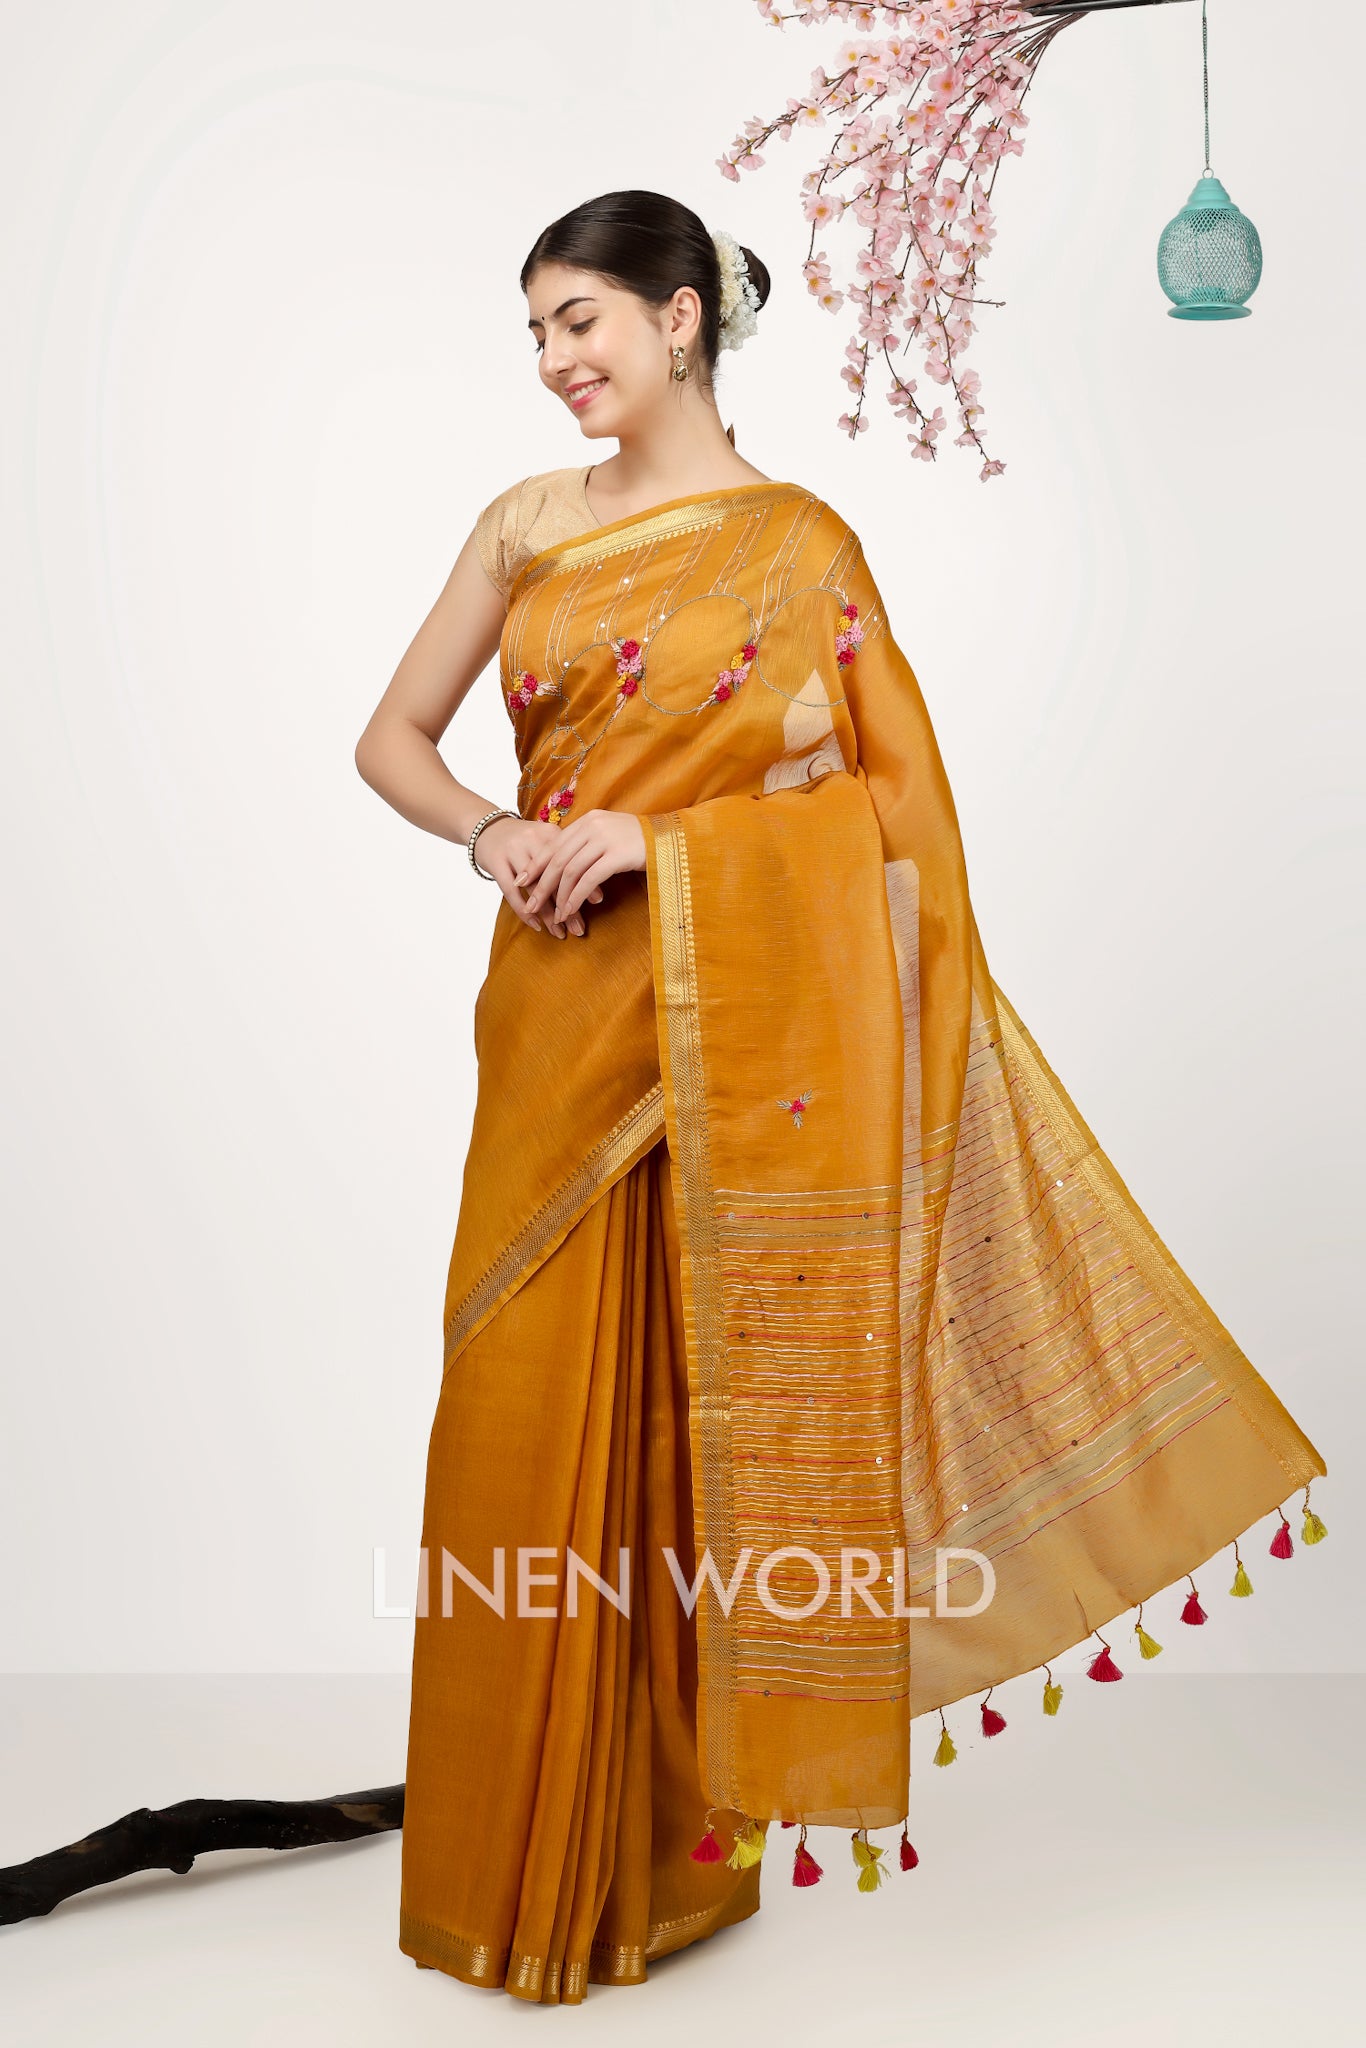 nida - french knot dull orange silk linen sari - linenworldonline.in